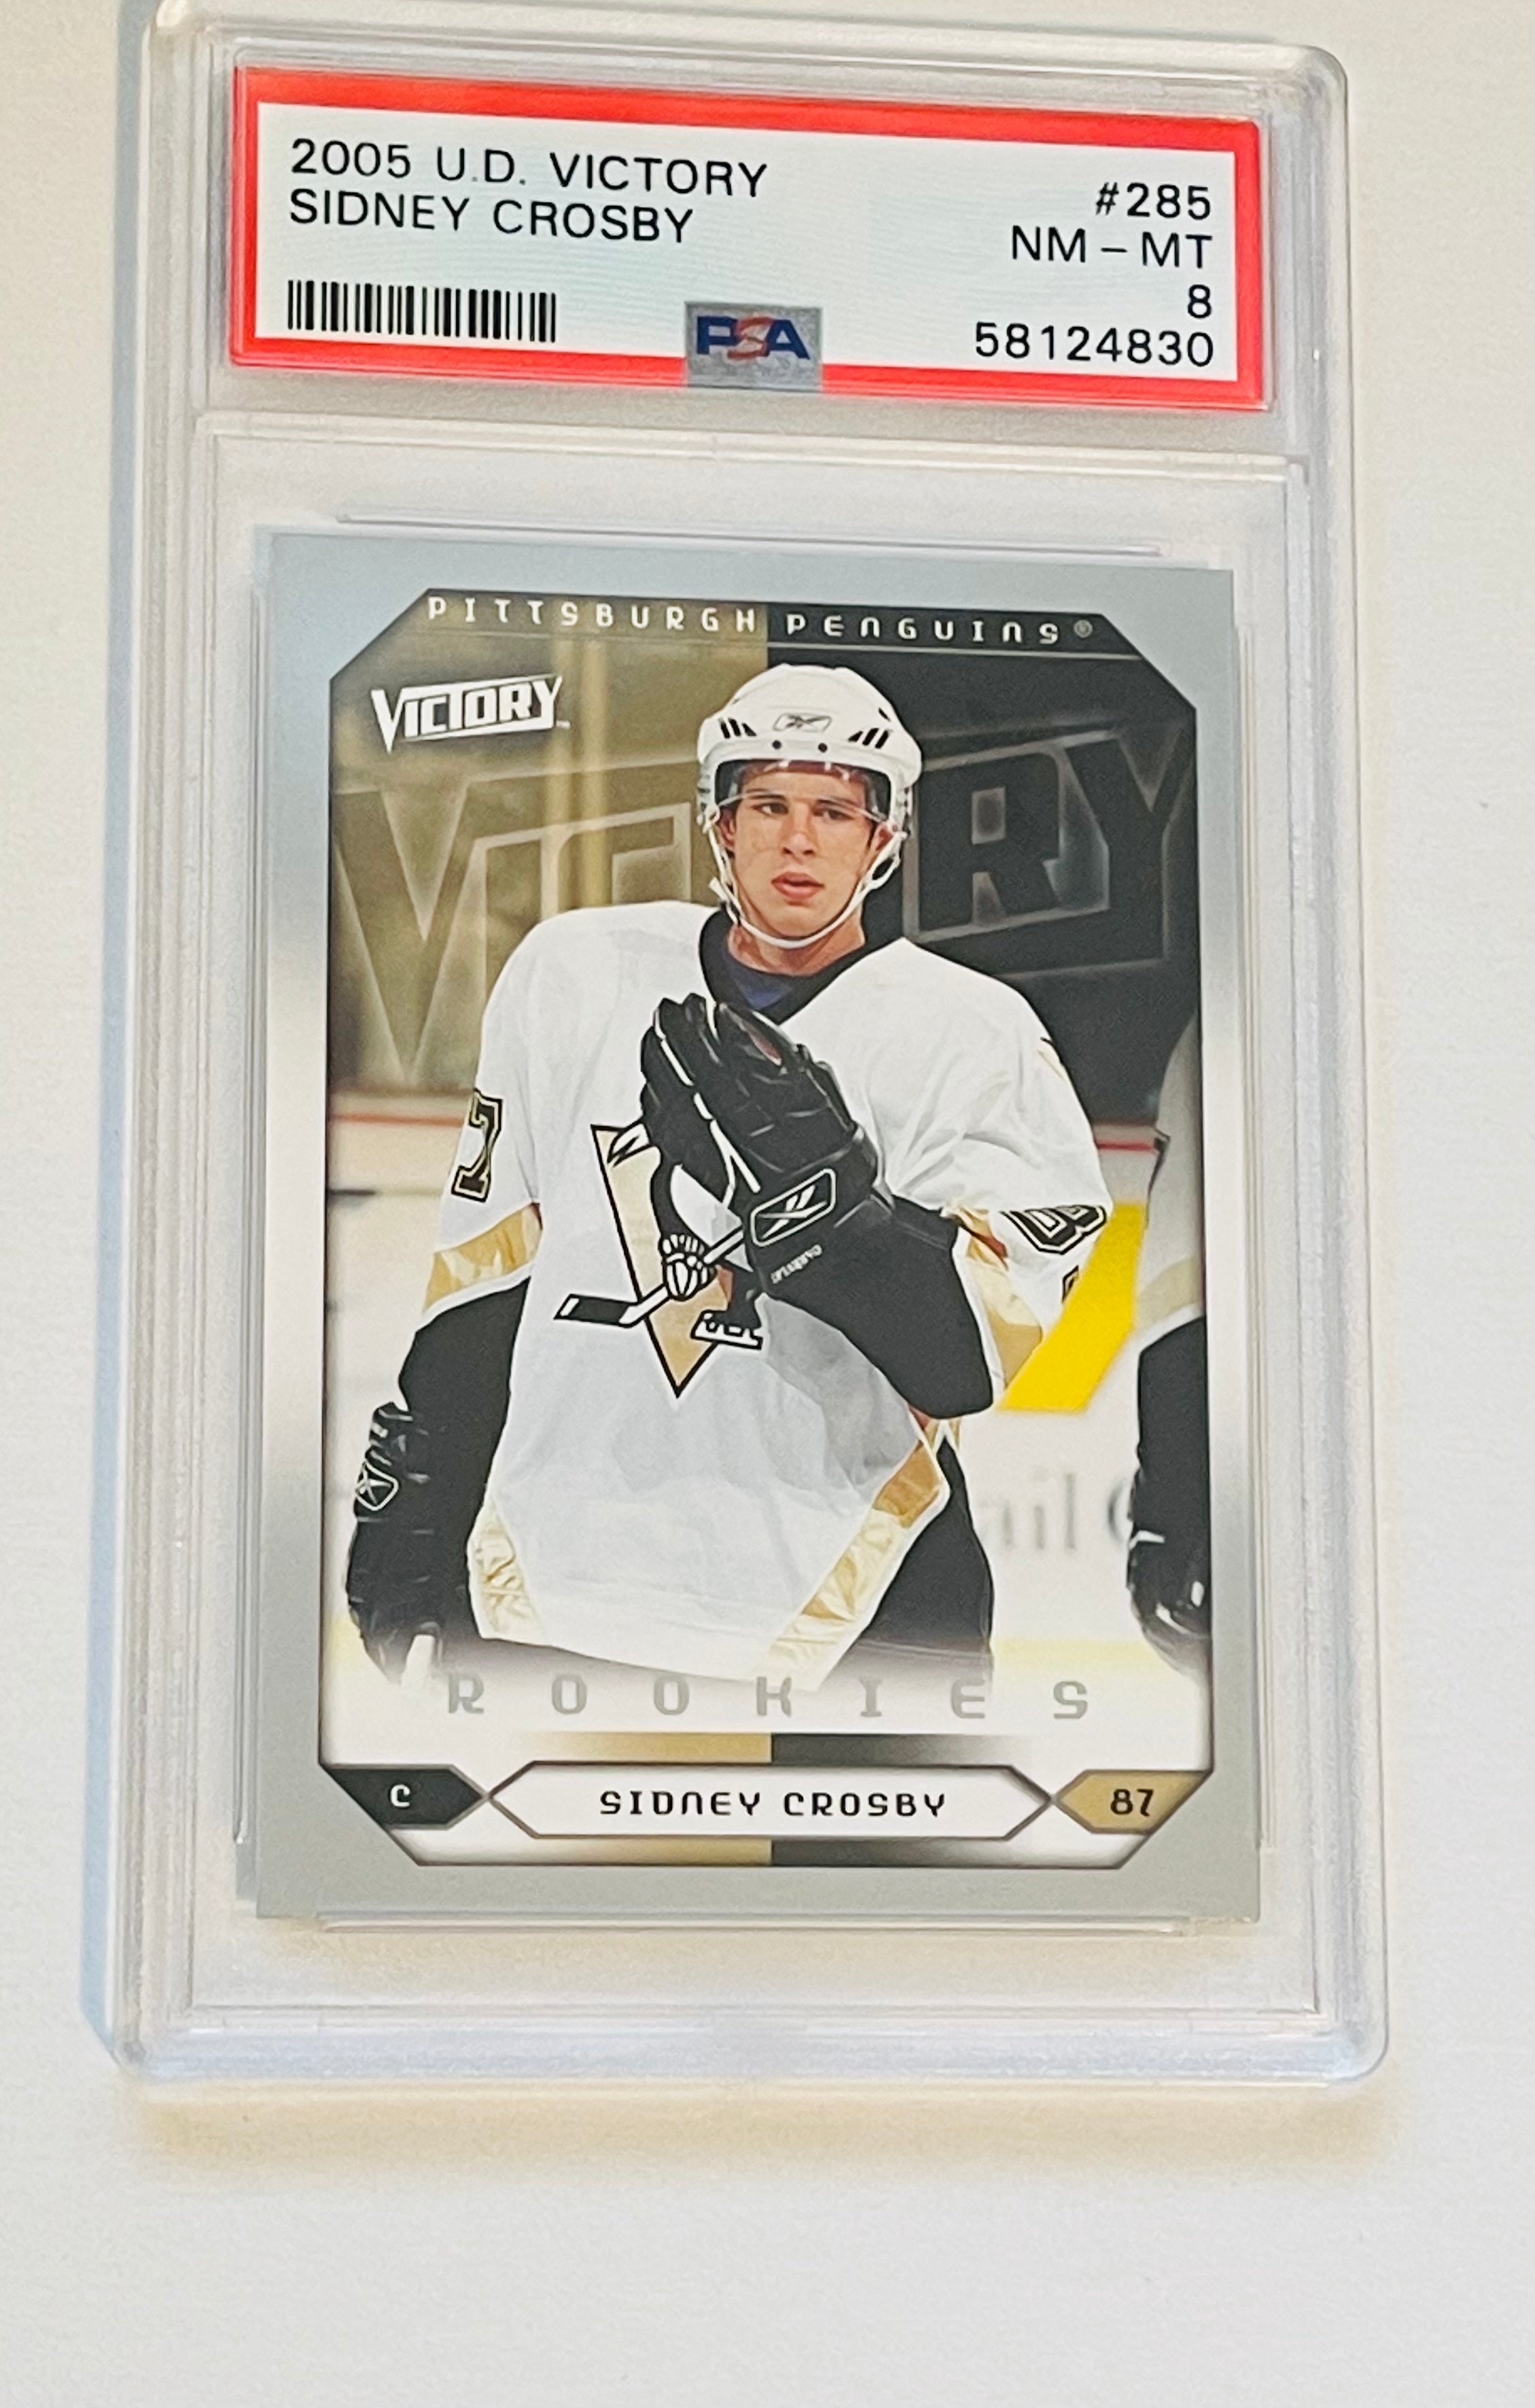 Sidney Crosby Upper Deck PSA 8 Victory high grade rookie hockey card 2